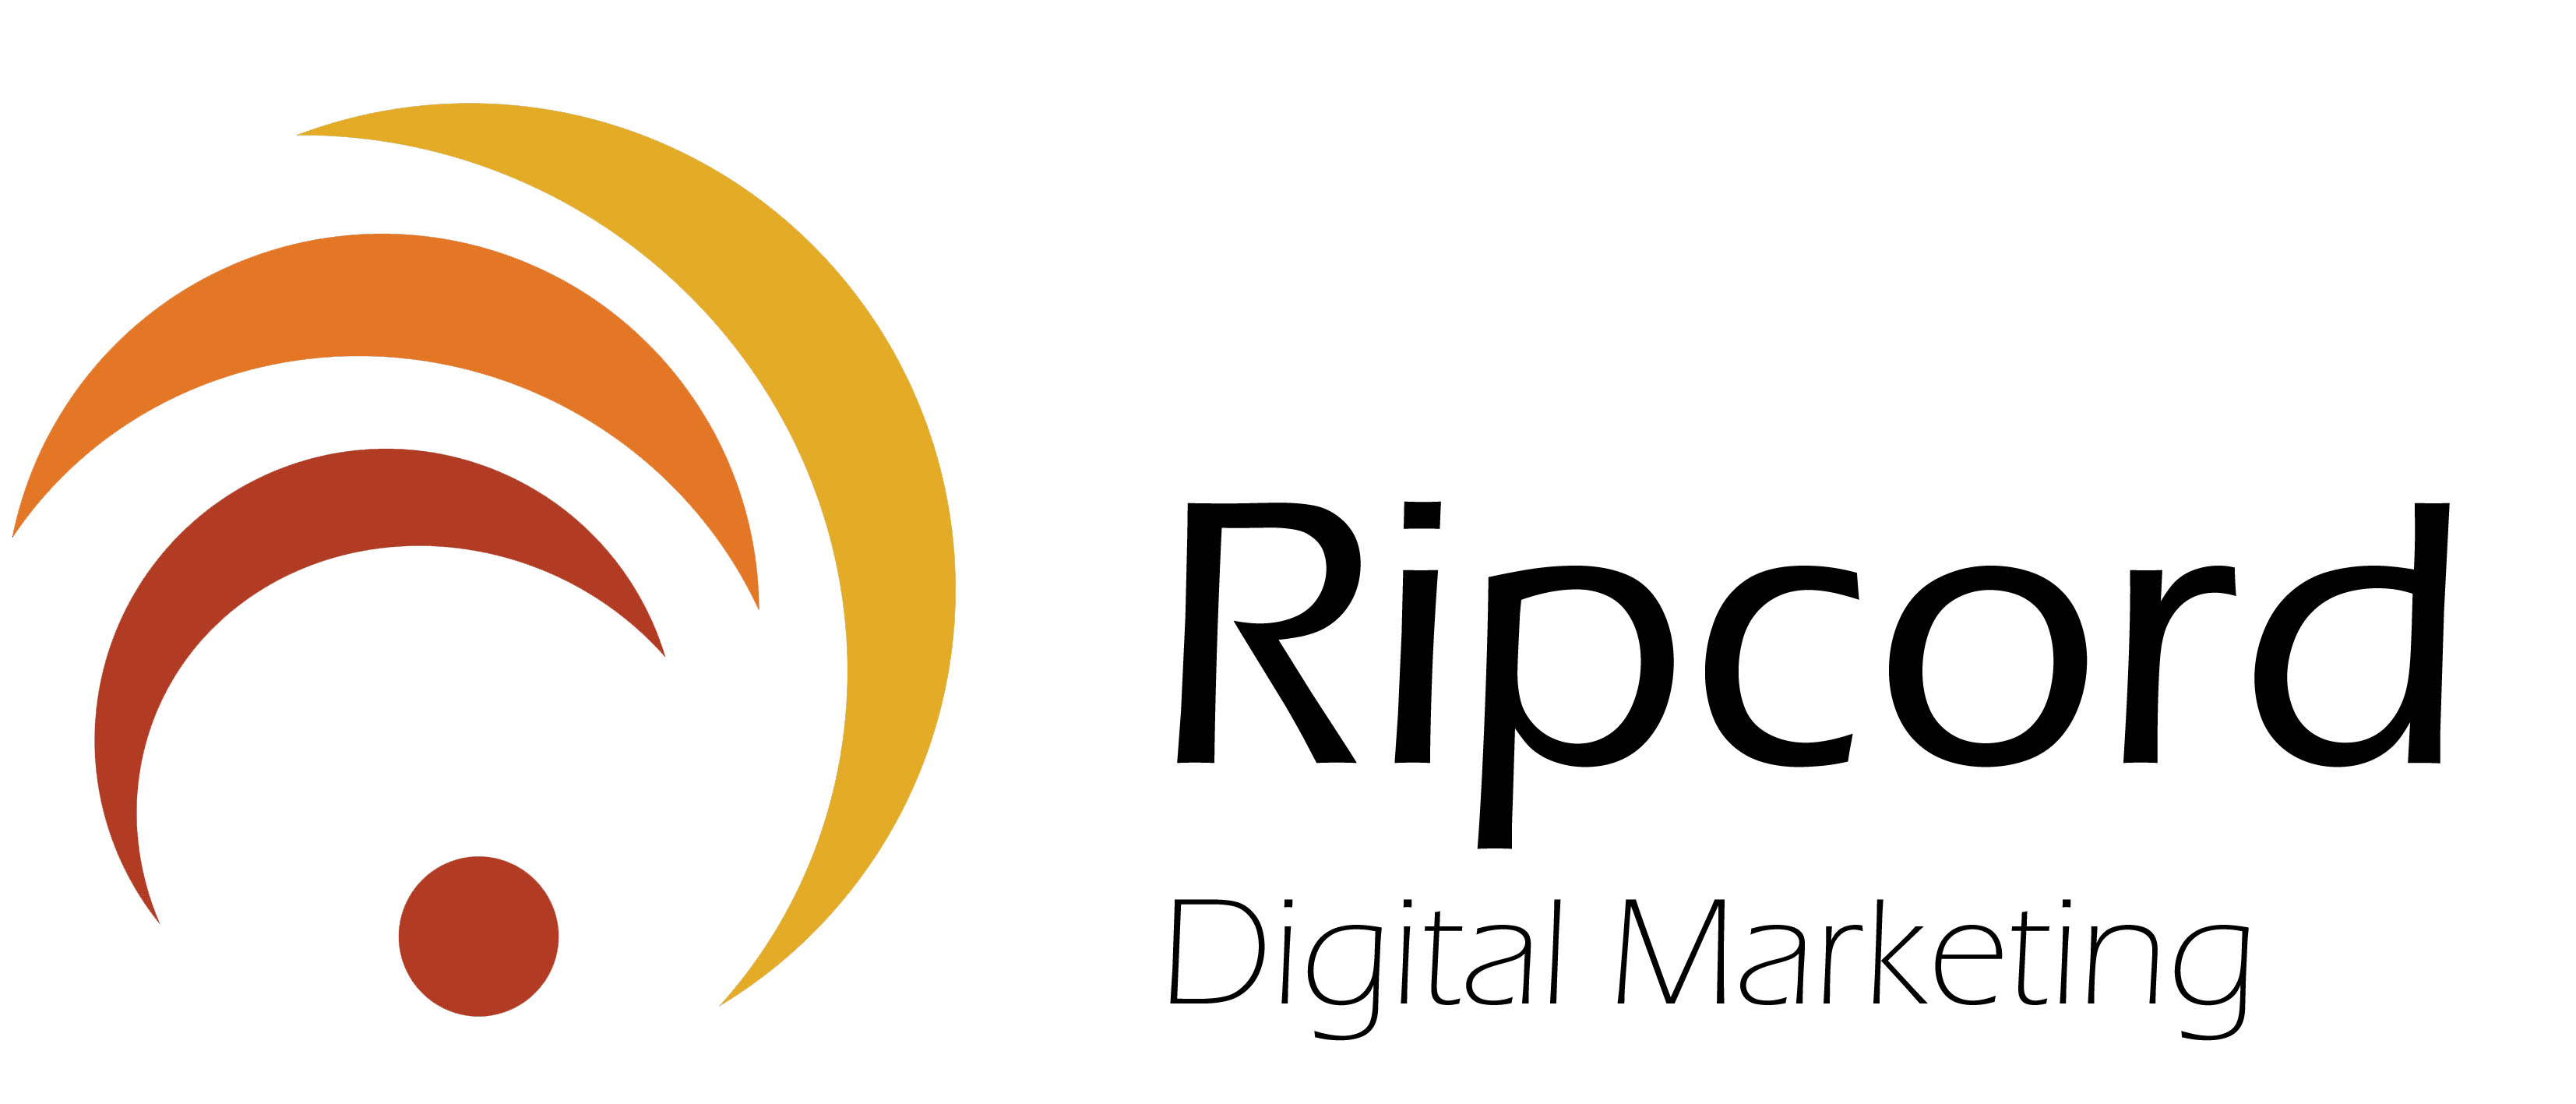 Ripcord Digital Marketing